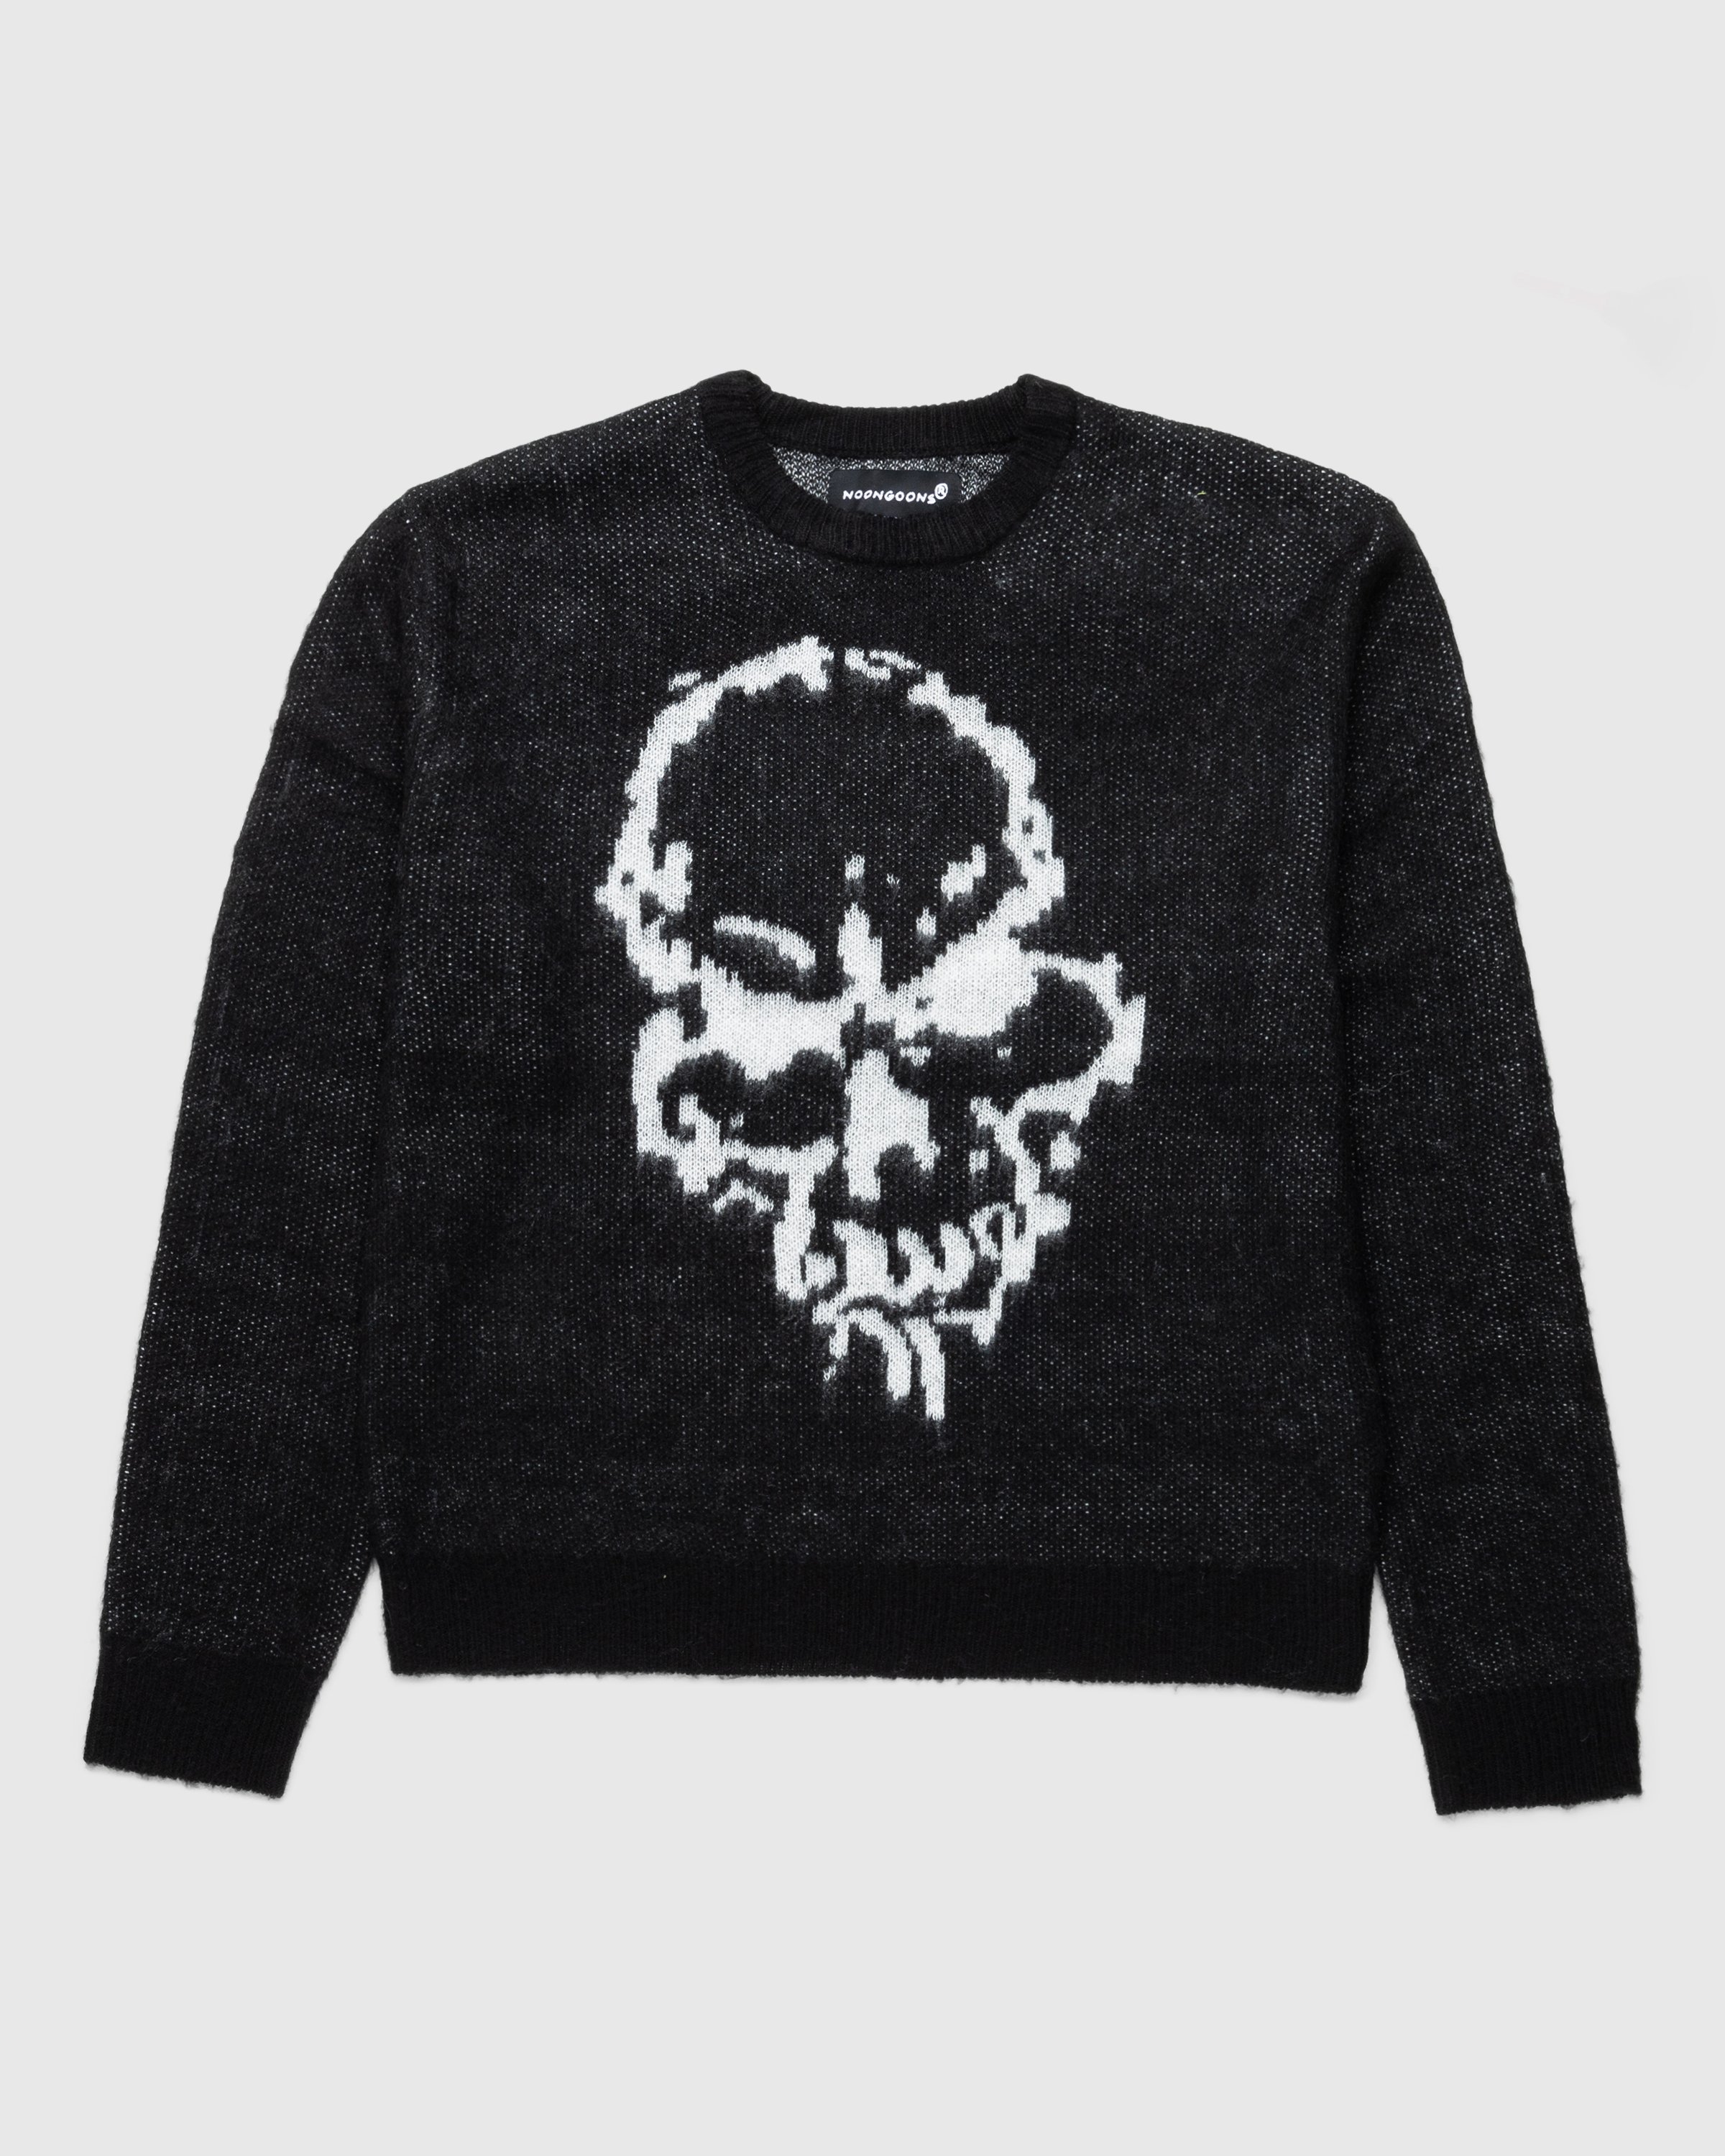 Noon Goons - Gatekeeper Sweater Black - Clothing - Black - Image 1